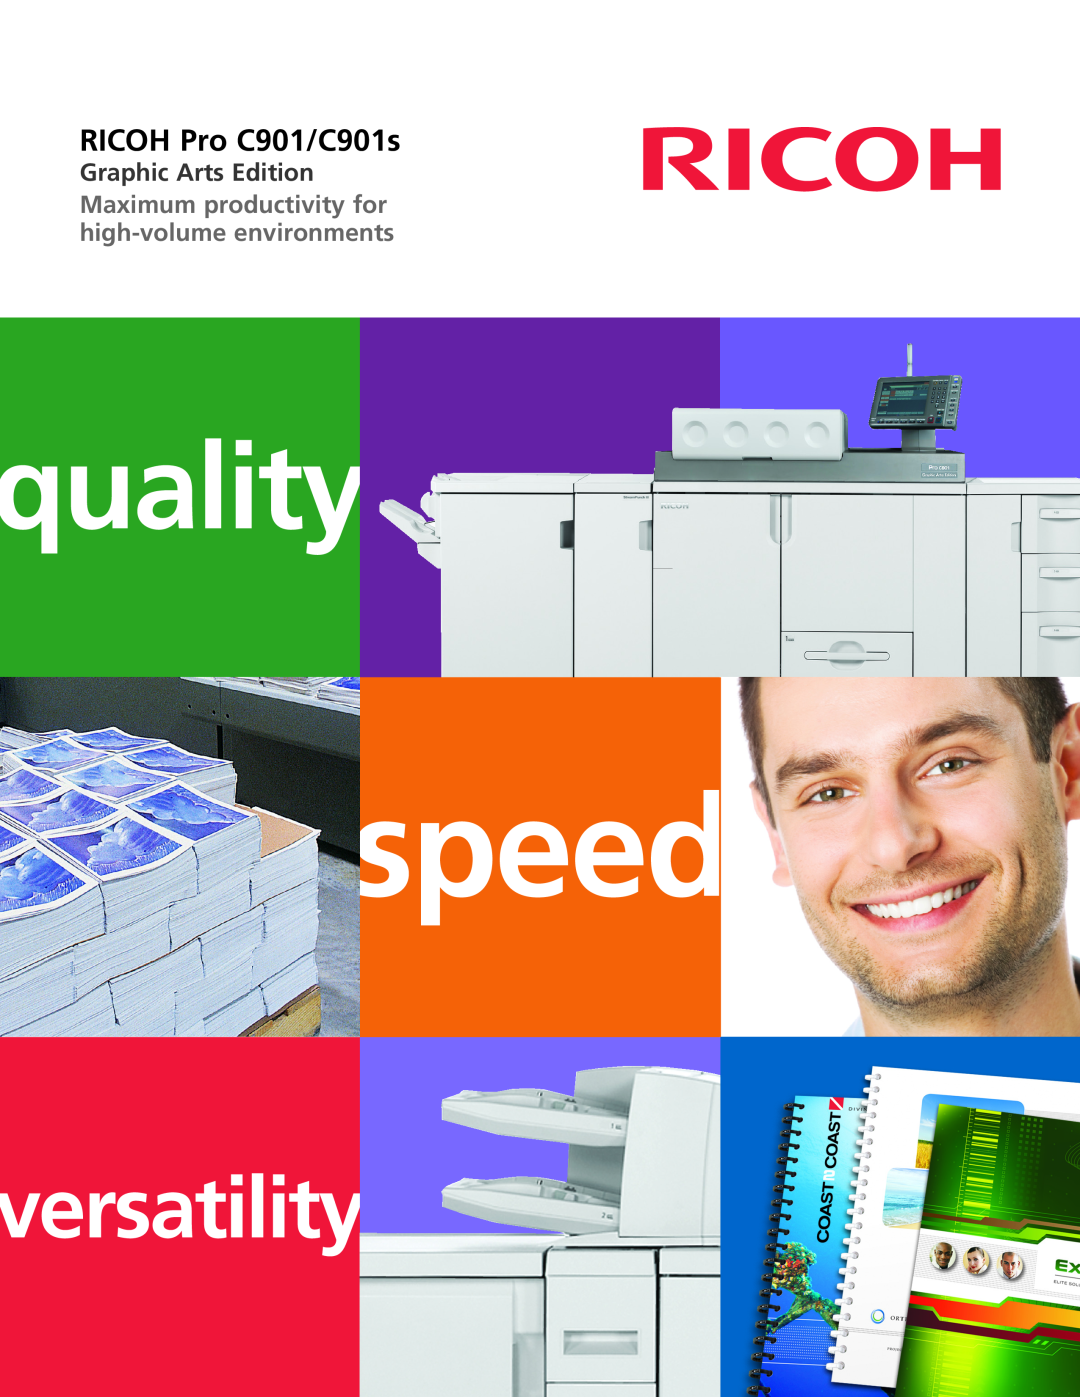 Ricoh C901S manual speed, quality, versatility, Ricoh Pro C901/C901s, Graphic Arts Edition 